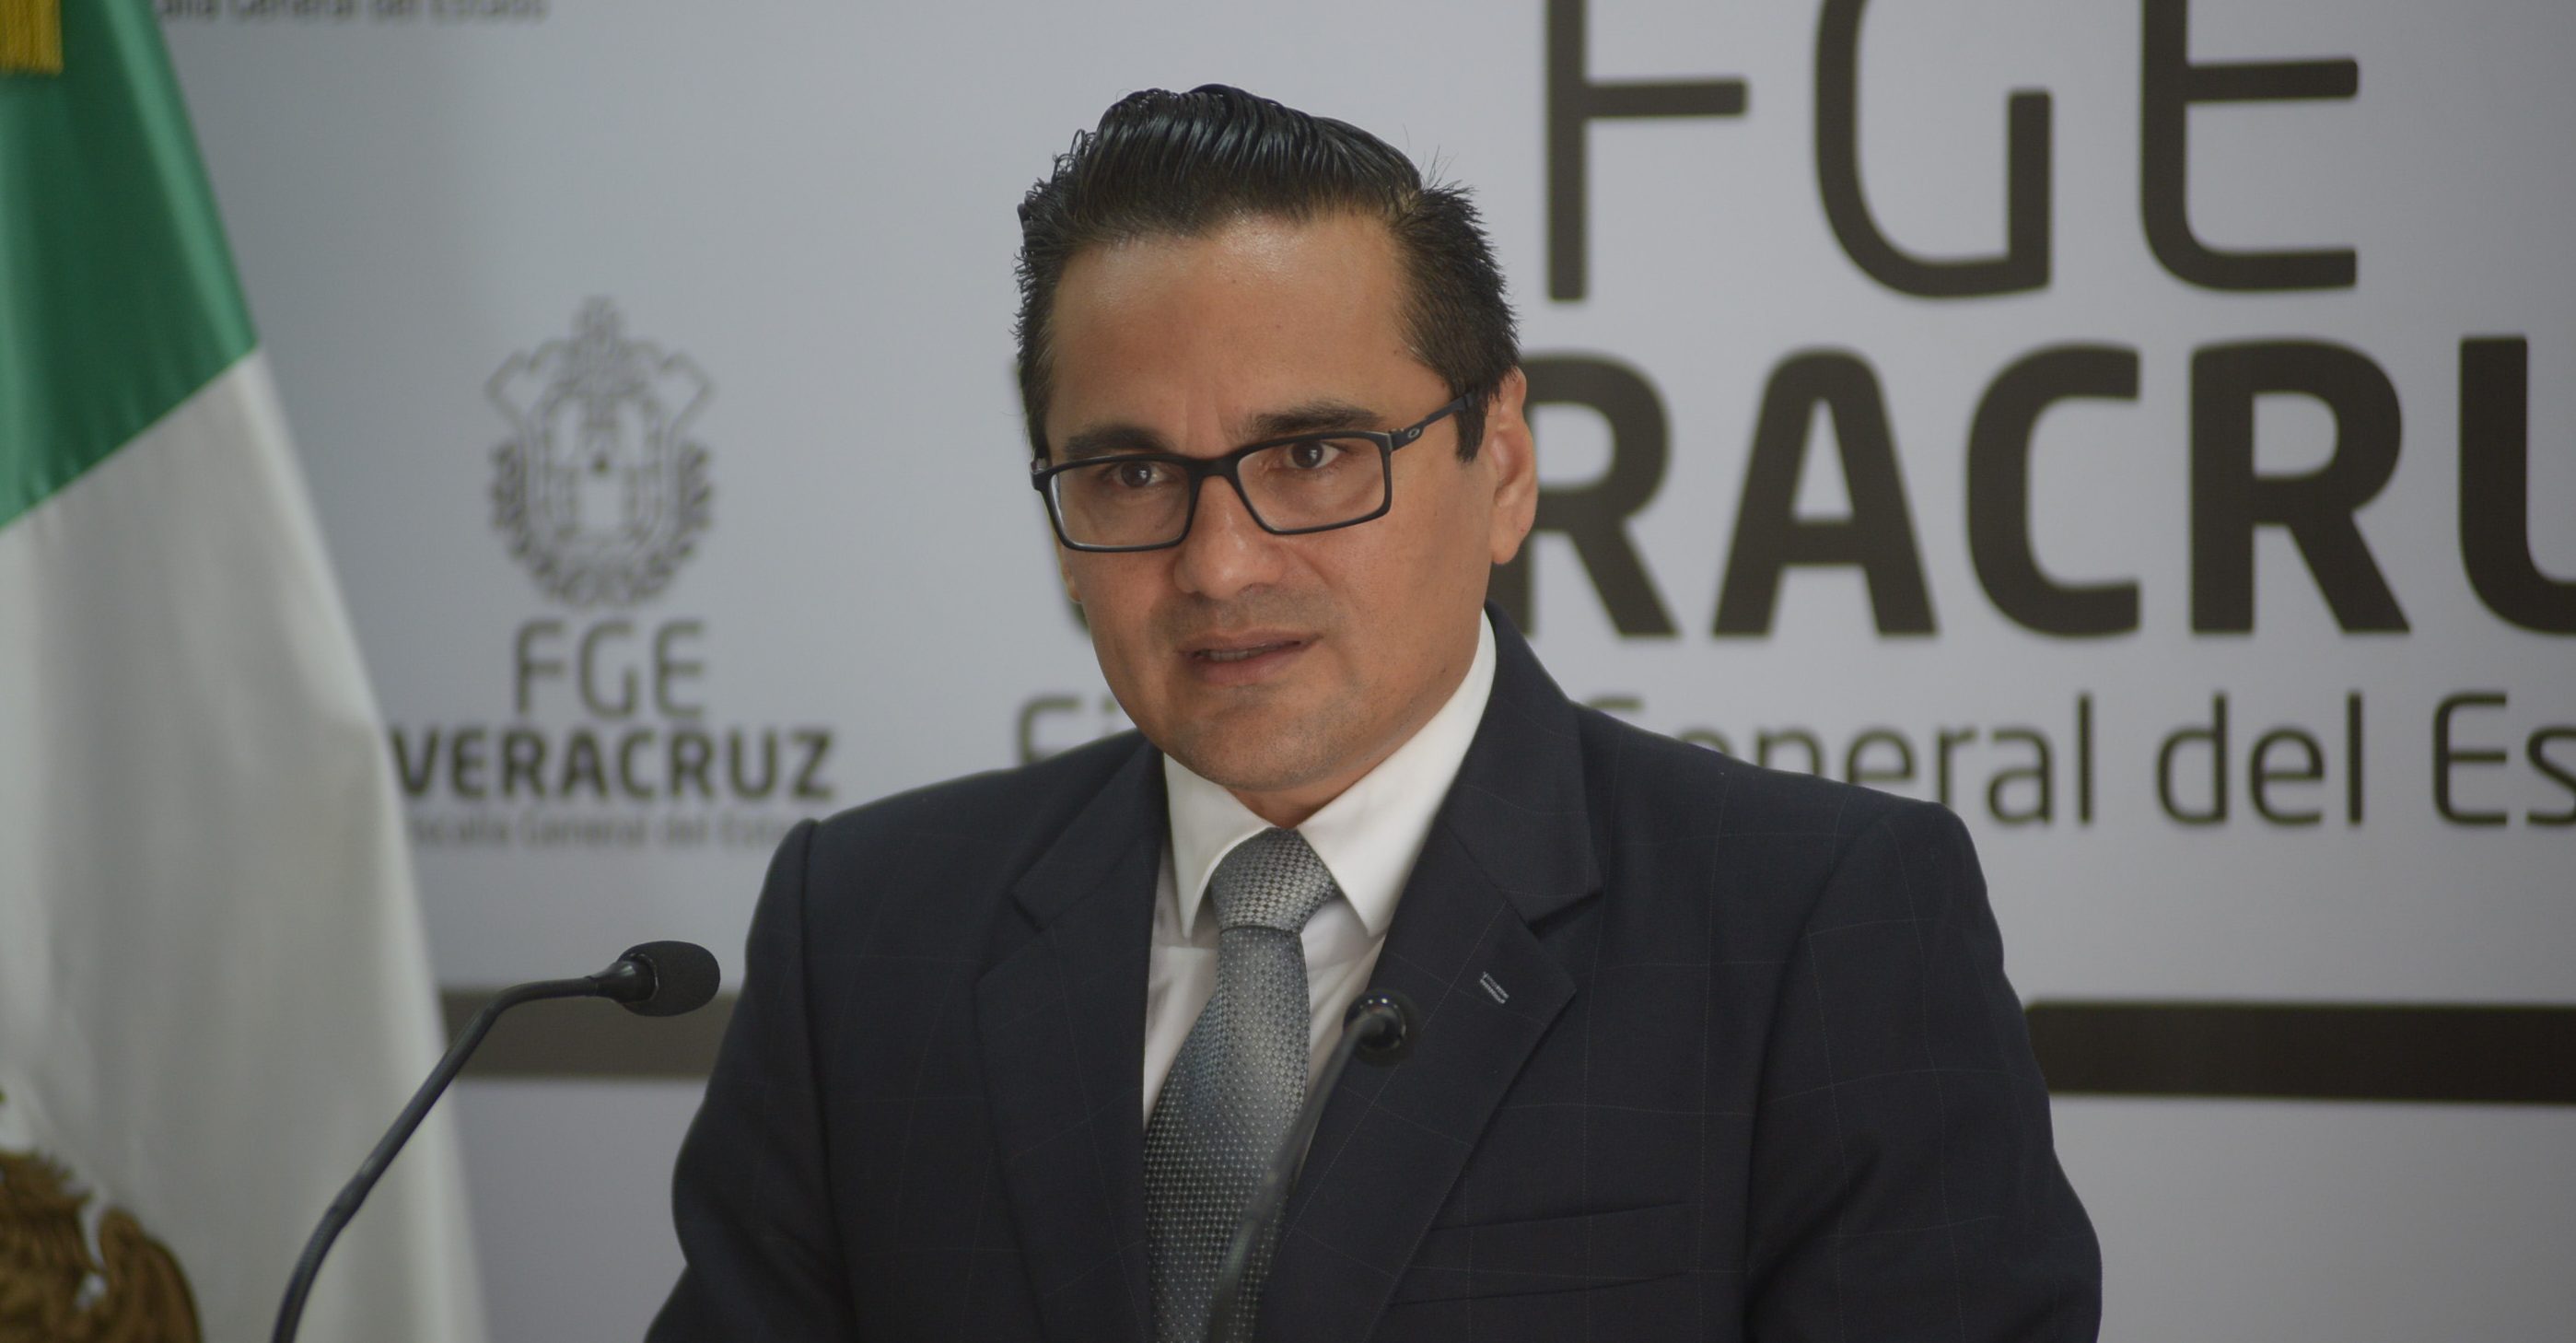 Fiscal de Veracruz debe desbloquear a periodista en Twitter